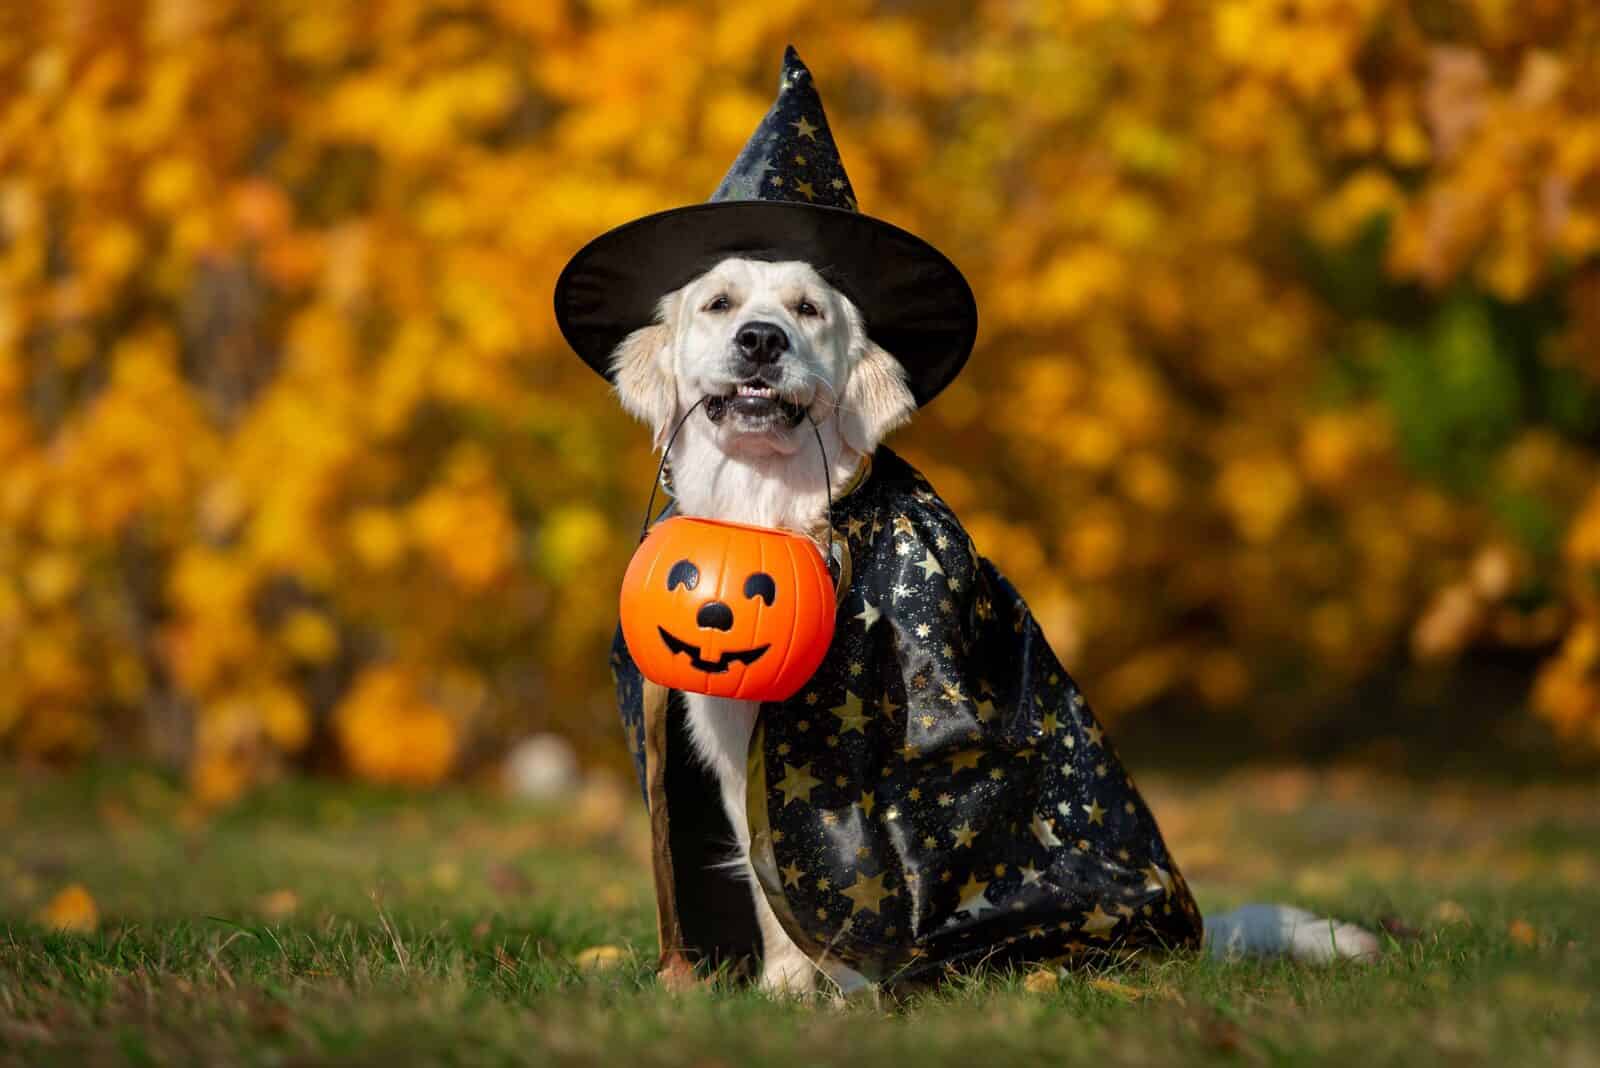 Pets in Costumes: Your Spook-tacular Halloween Furballs!